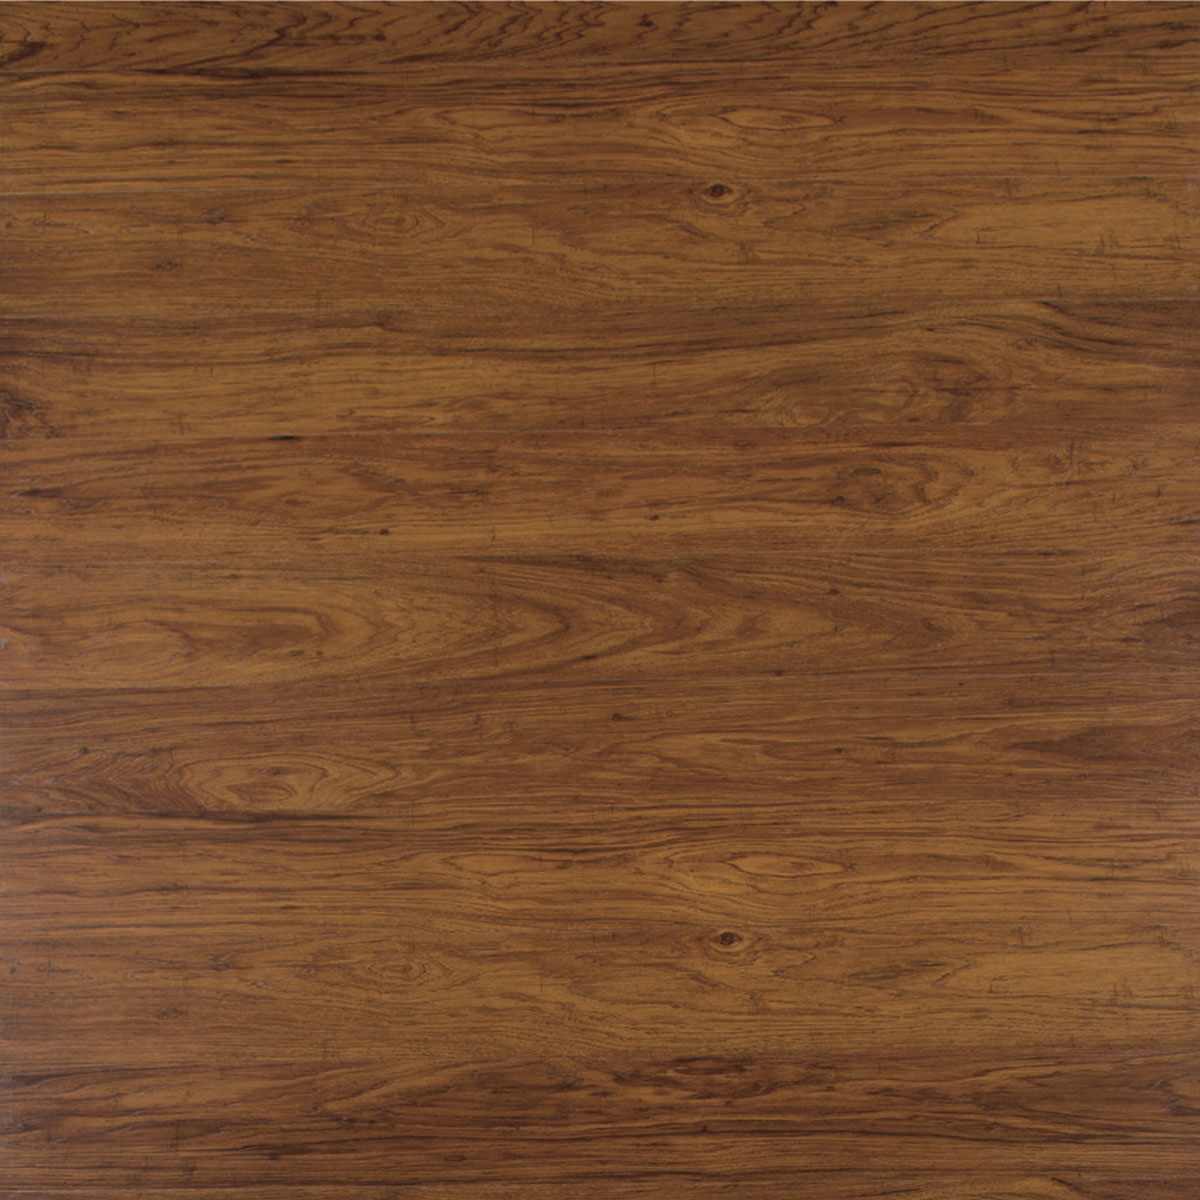 Cognac Hickory Laminate Floor Sample